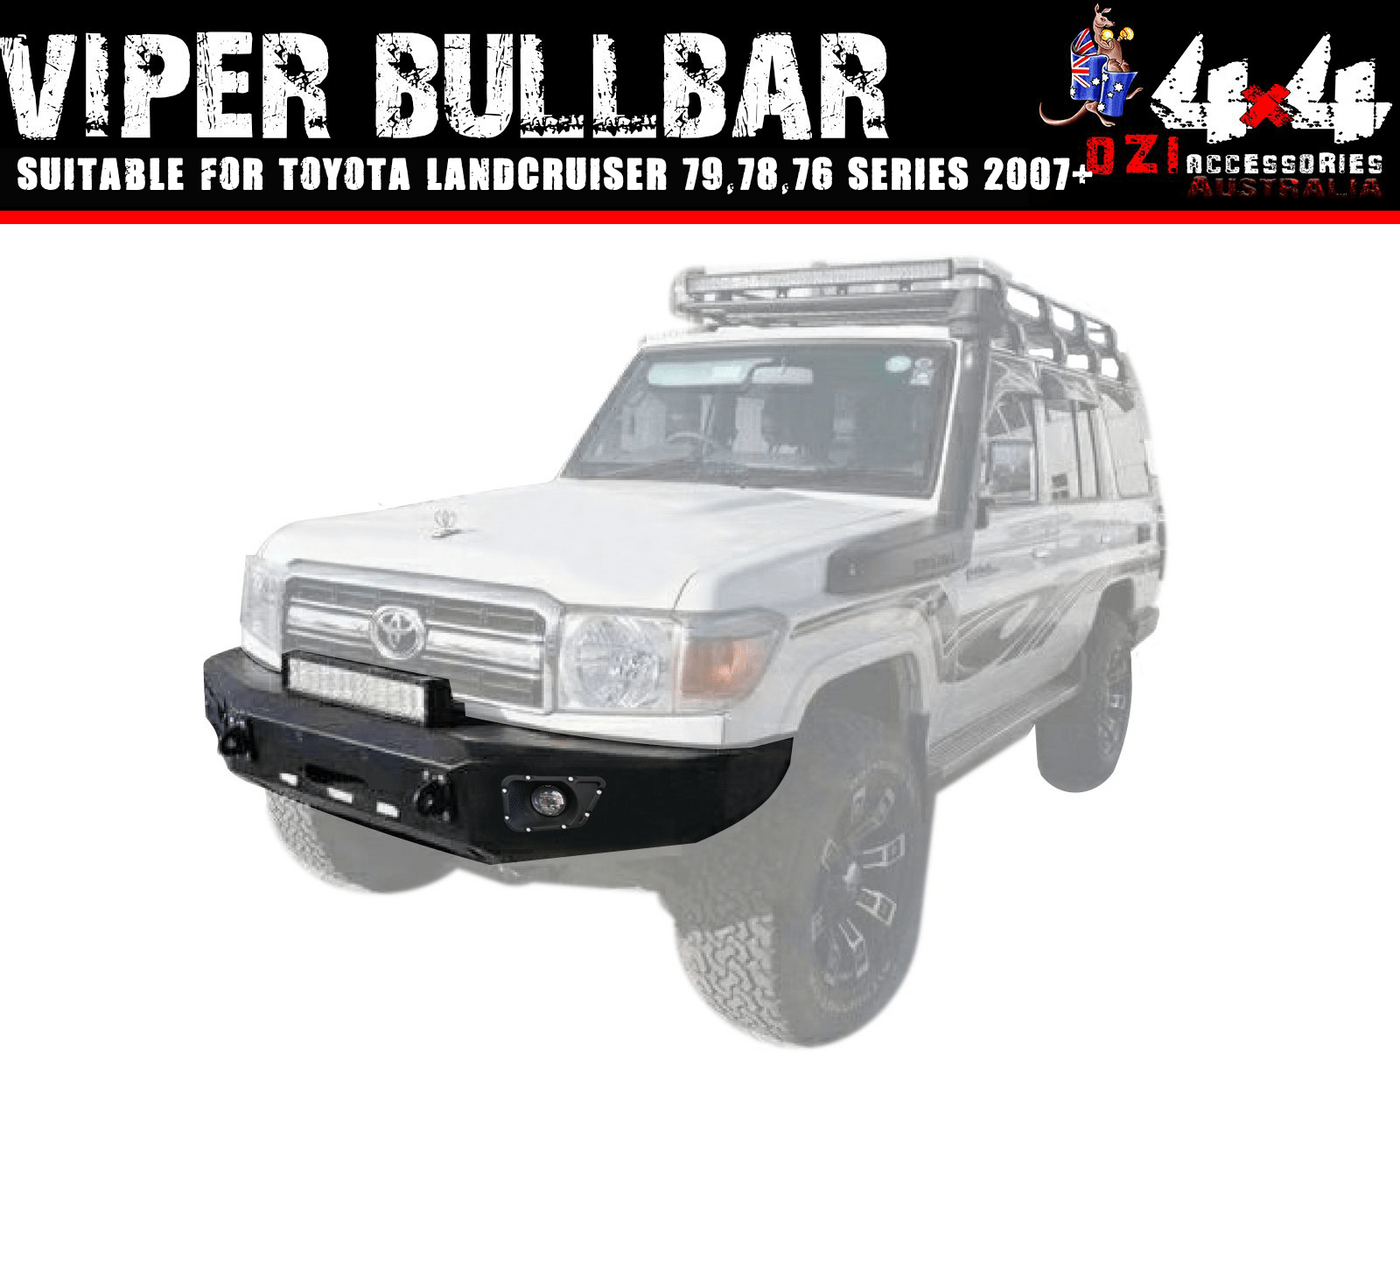 Viper Bullbar Suitable For Toyota Land Cruiser 79,78,76 Series 2007+ - OZI4X4 PTY LTD